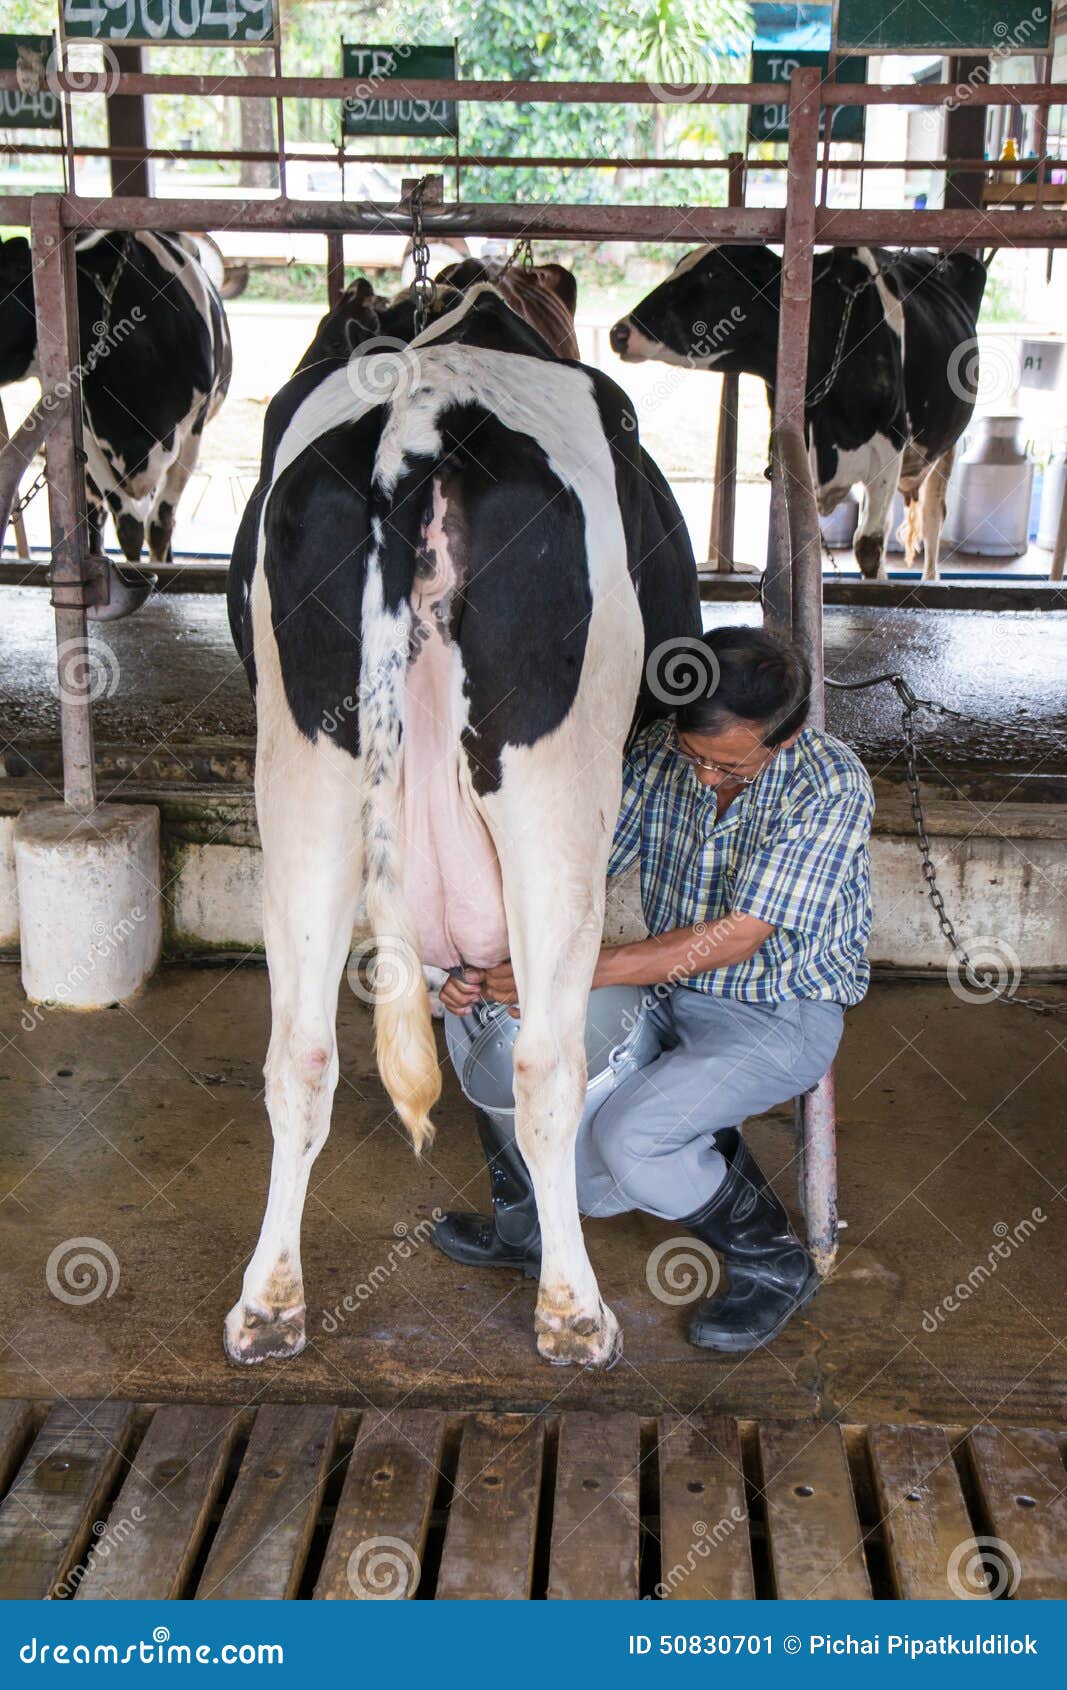 Корова не очистилась. Корова и человек. Ферма коров с людьми. Корова с человеческий рост. Корова и человек стоят.